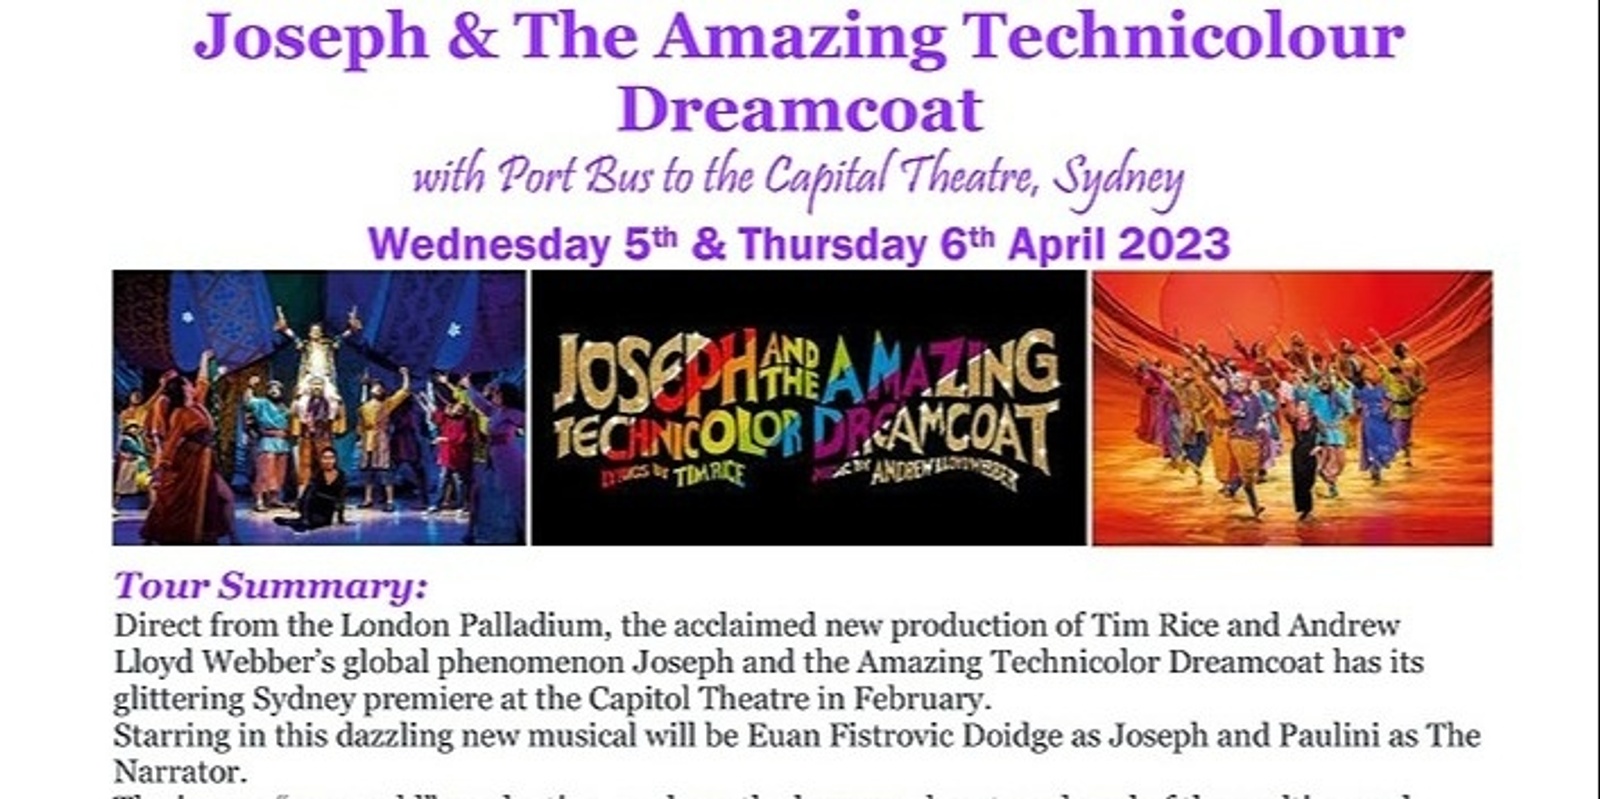 Banner image for Joseph & The Amazing Technicolour Dreamcoat